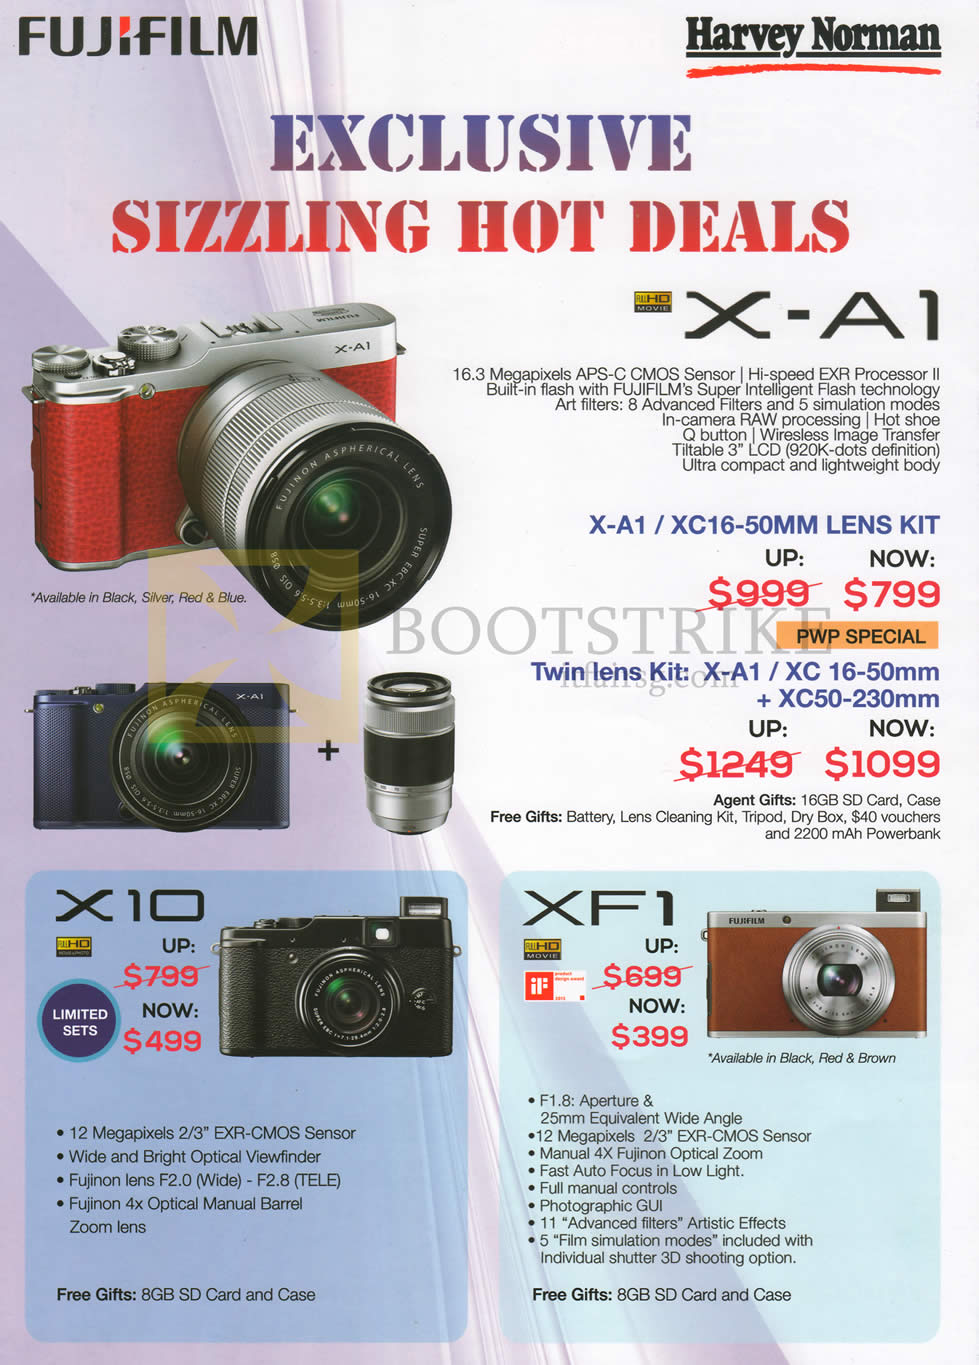 SITEX 2013 price list image brochure of Fujifilm Harvey Norman Digital Cameras X-A1, X10, XF1